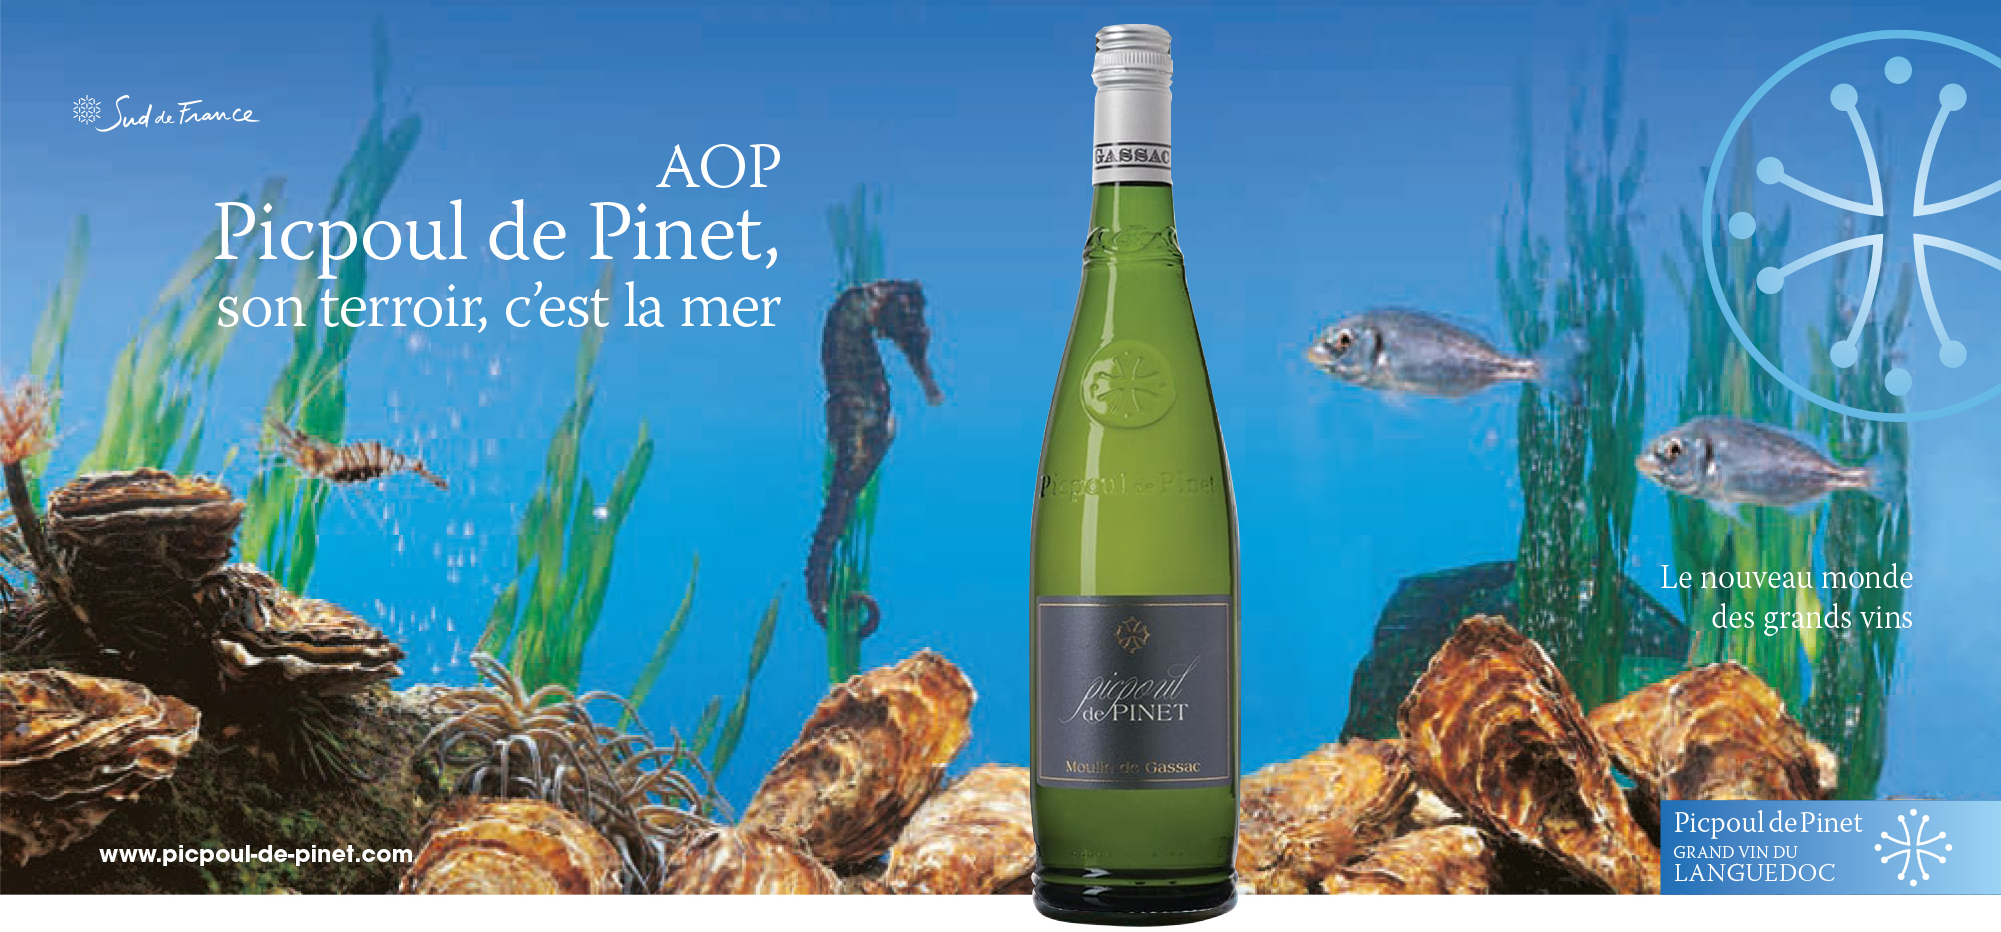 Picpoul de Pinet: Sein Terroir ist das Meer